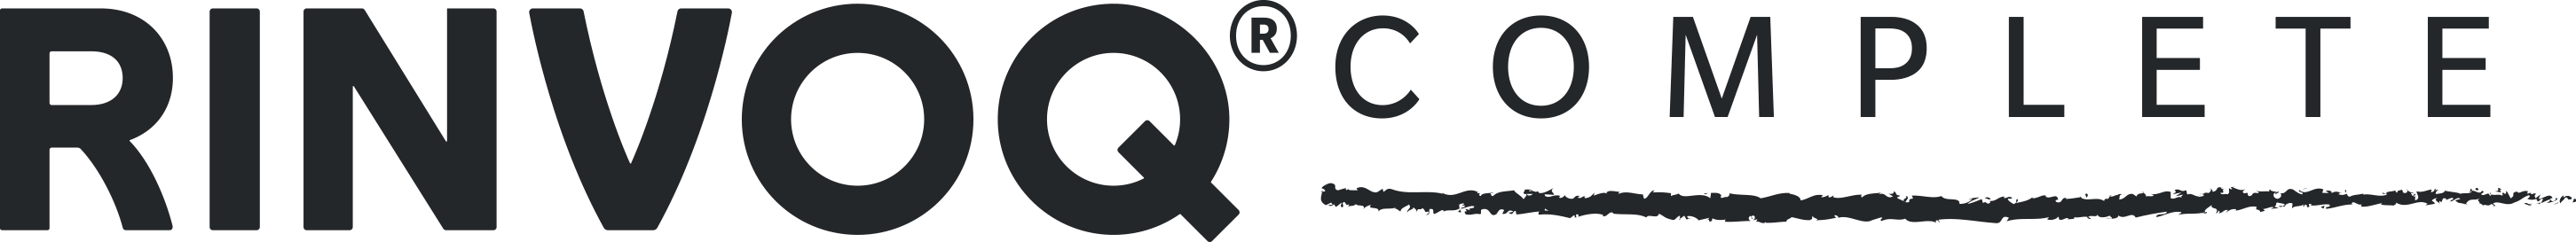 RINVOQ Complete logo